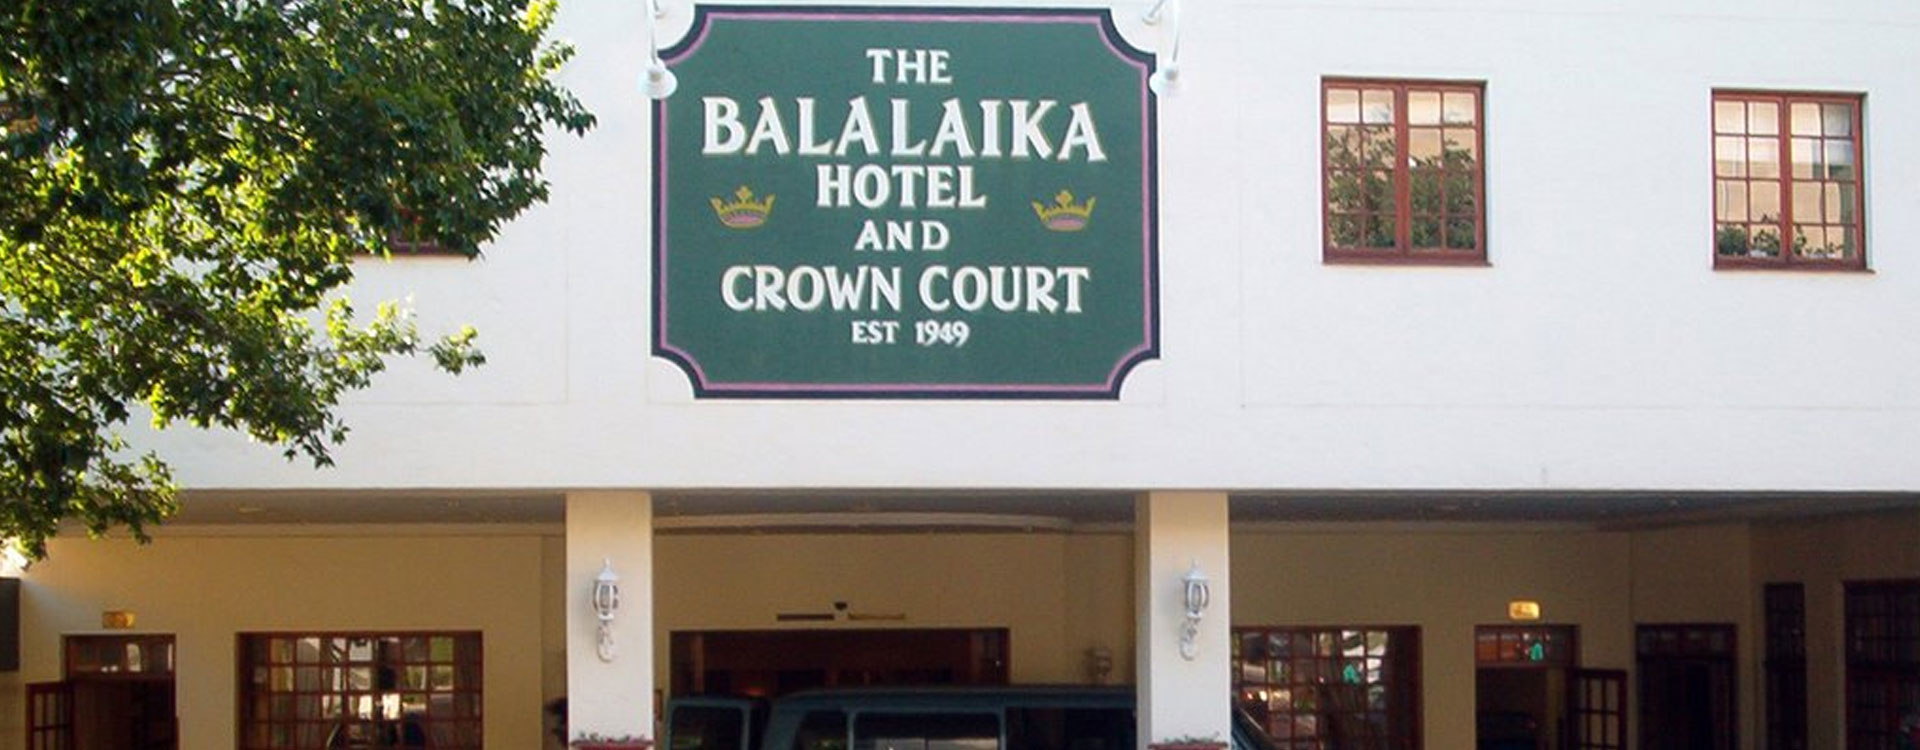 Balalaika Hotel